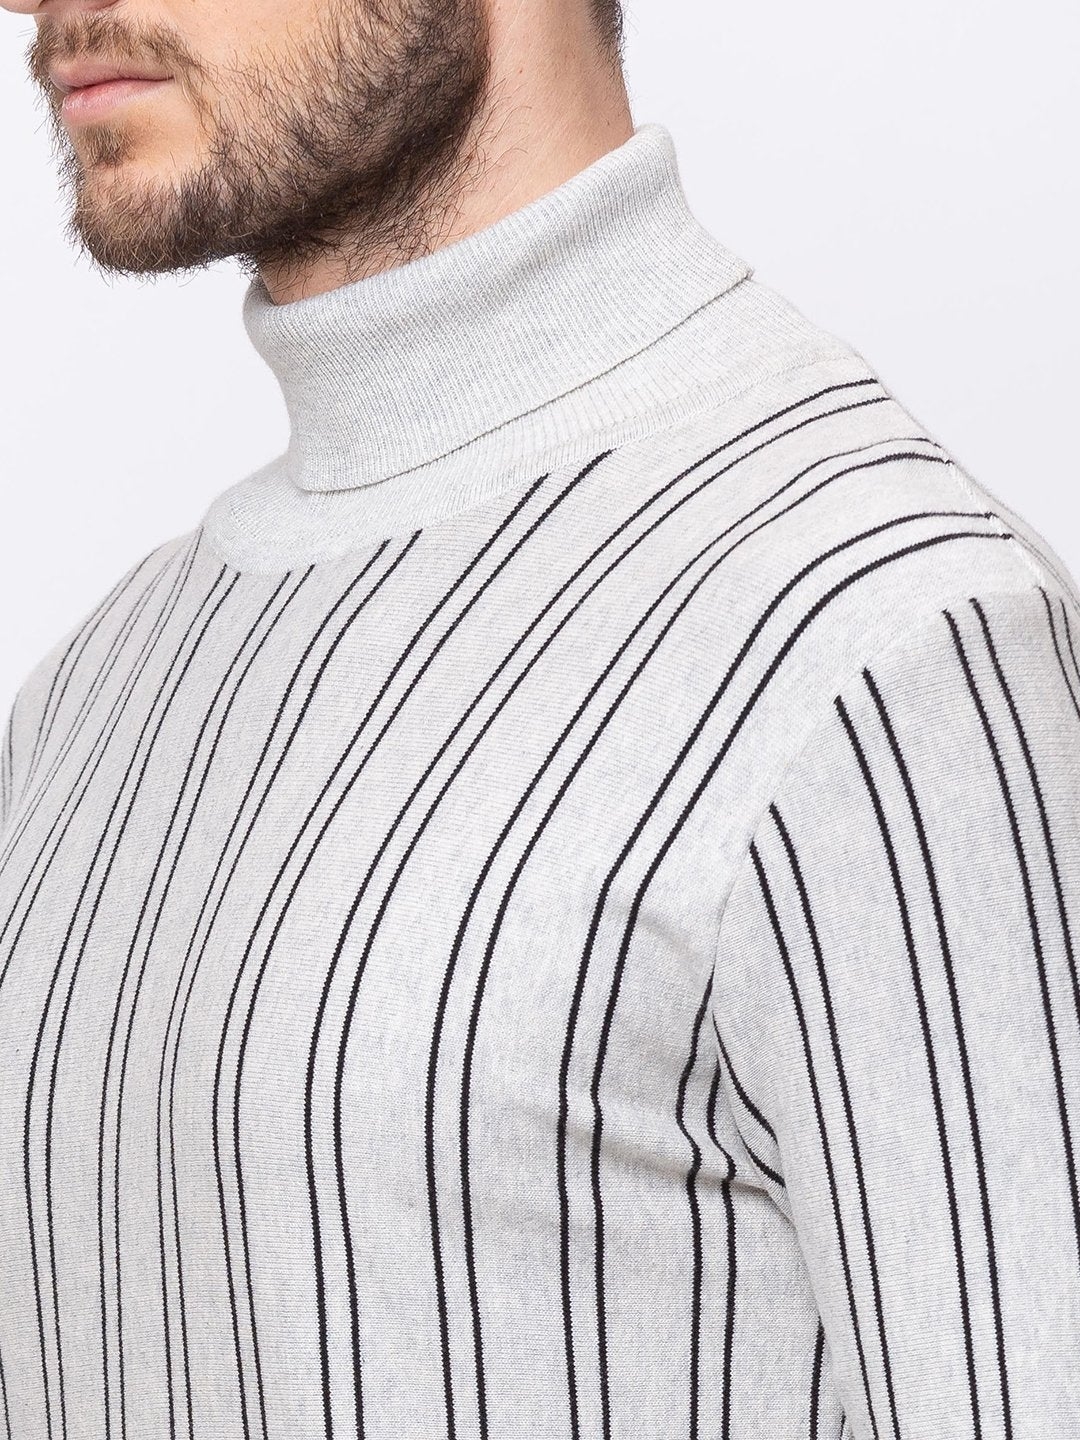 Men's Grey Cotton Striped Sweaters